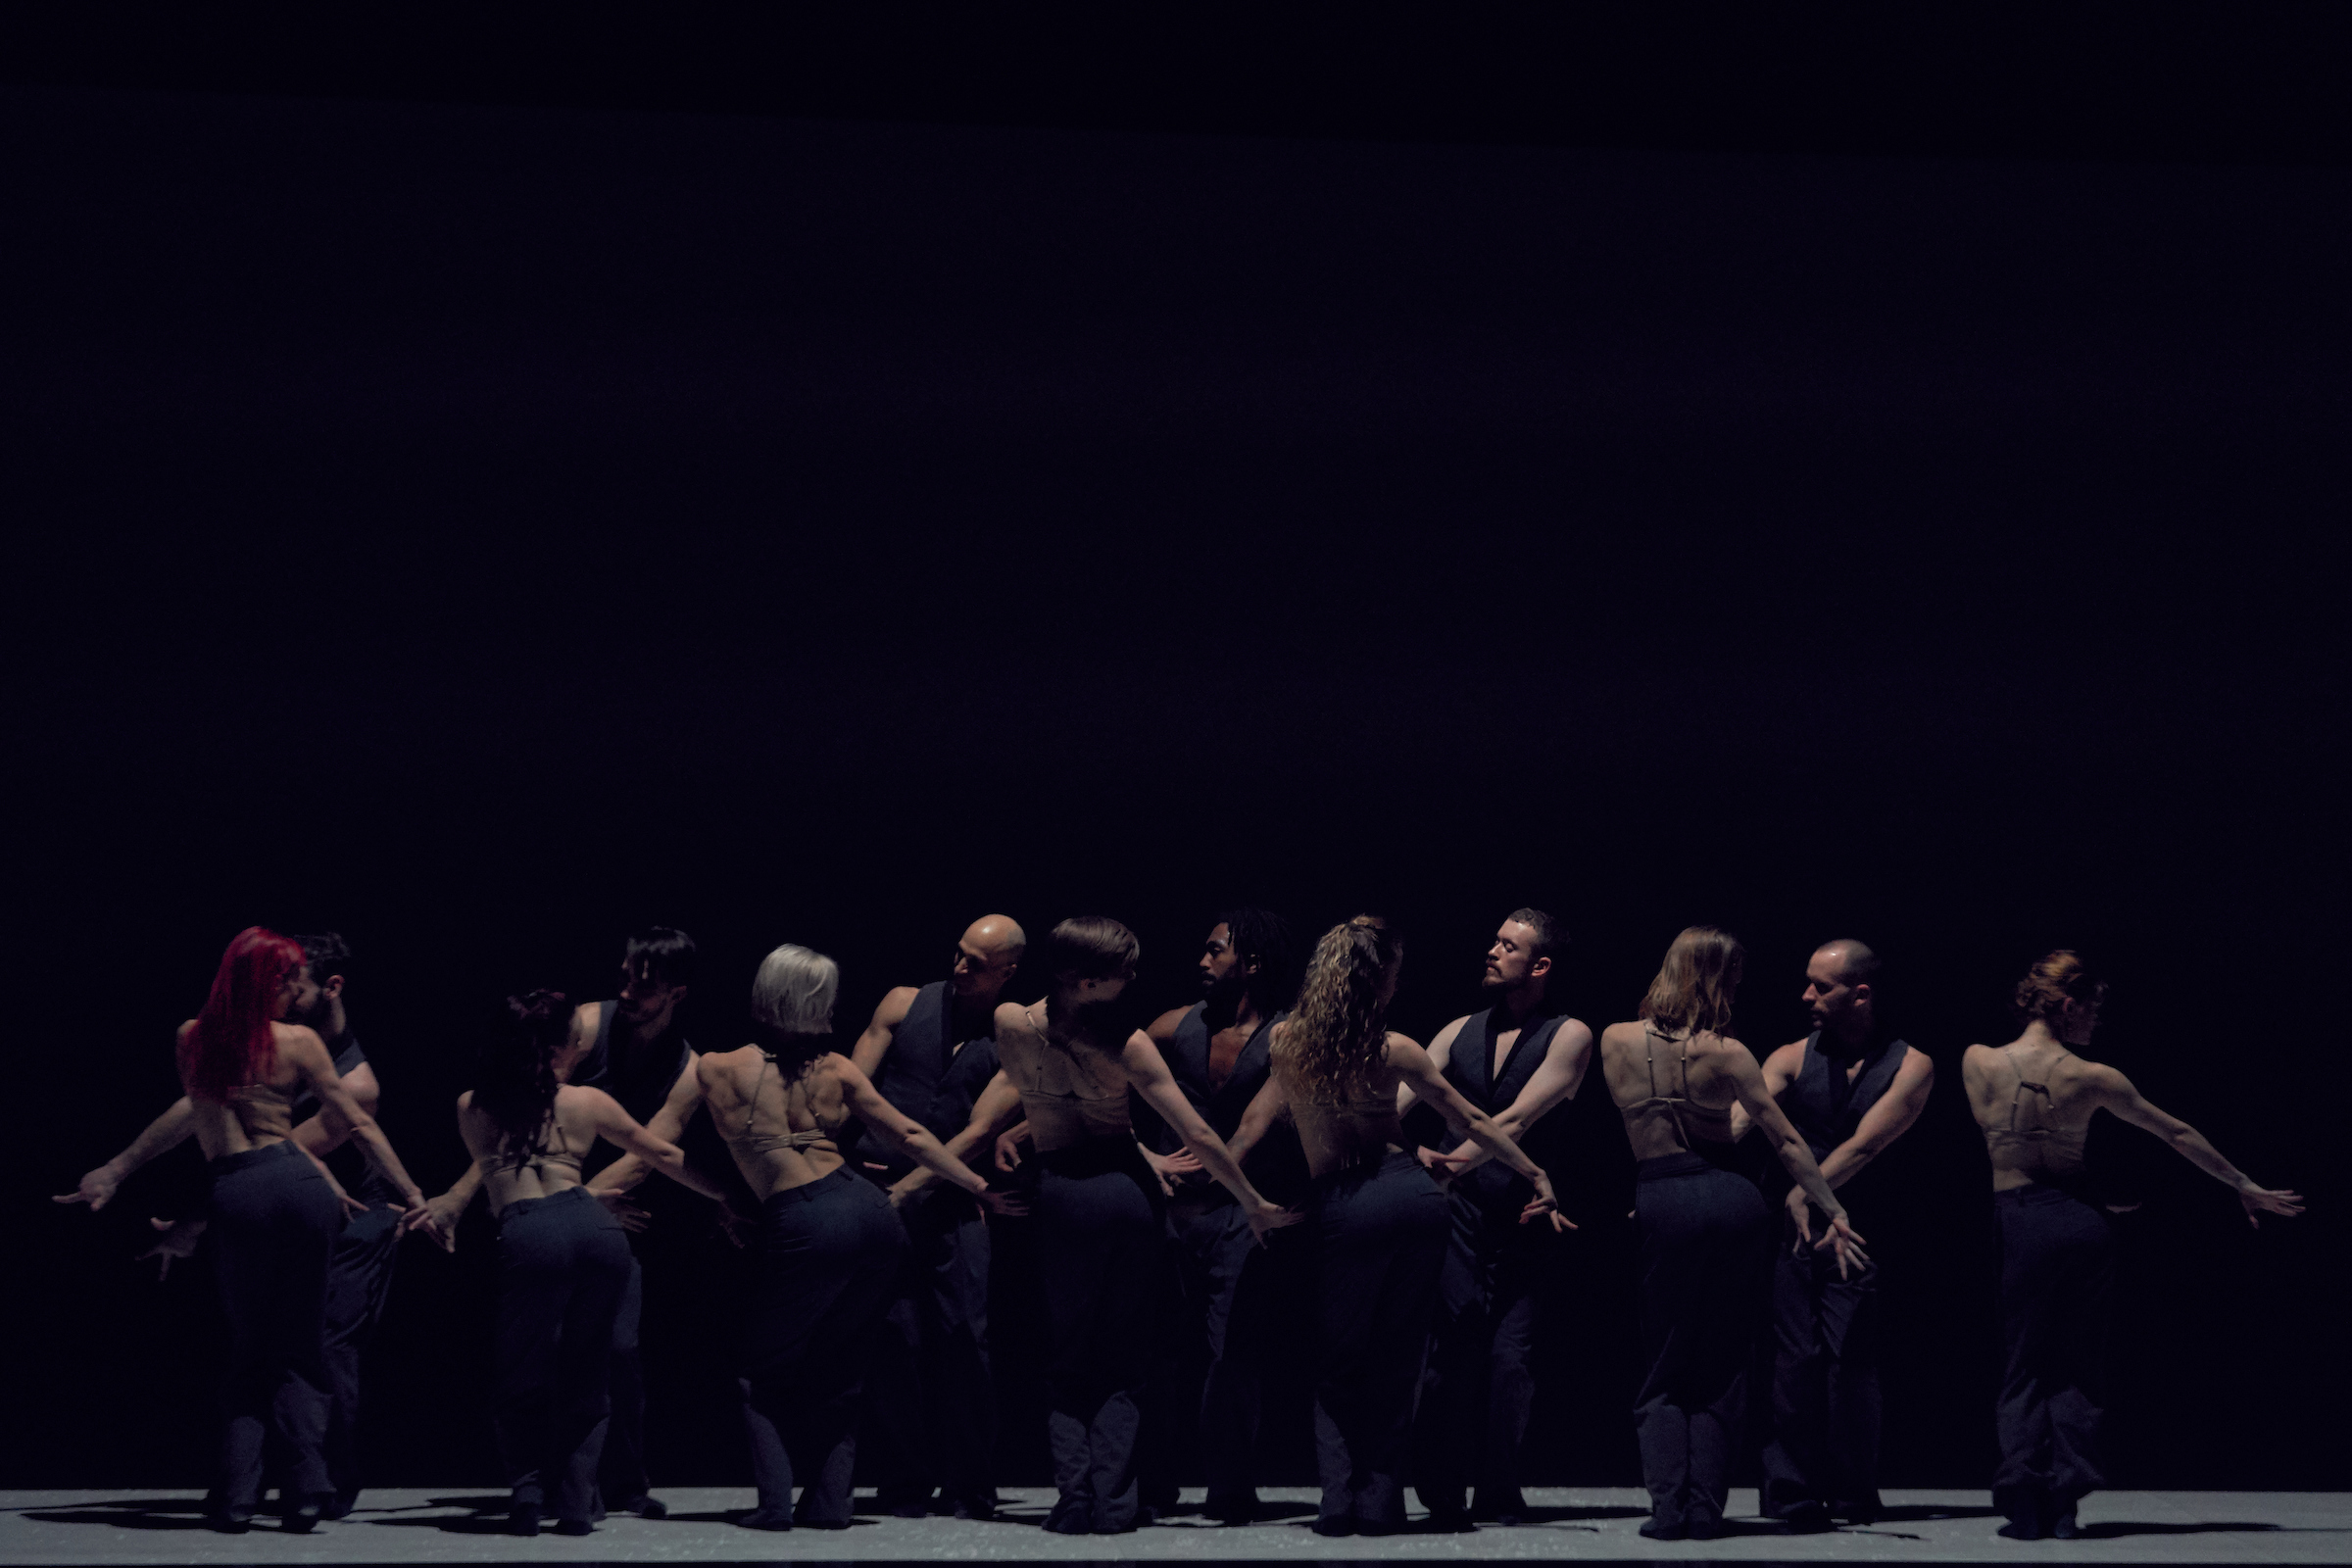 Dance Me: Το διάσημο Ballets Jazz Montréal έρχεται στο Μέγαρο με έναν χορευτικό φόρο-τιμής στον Leonard Cohen